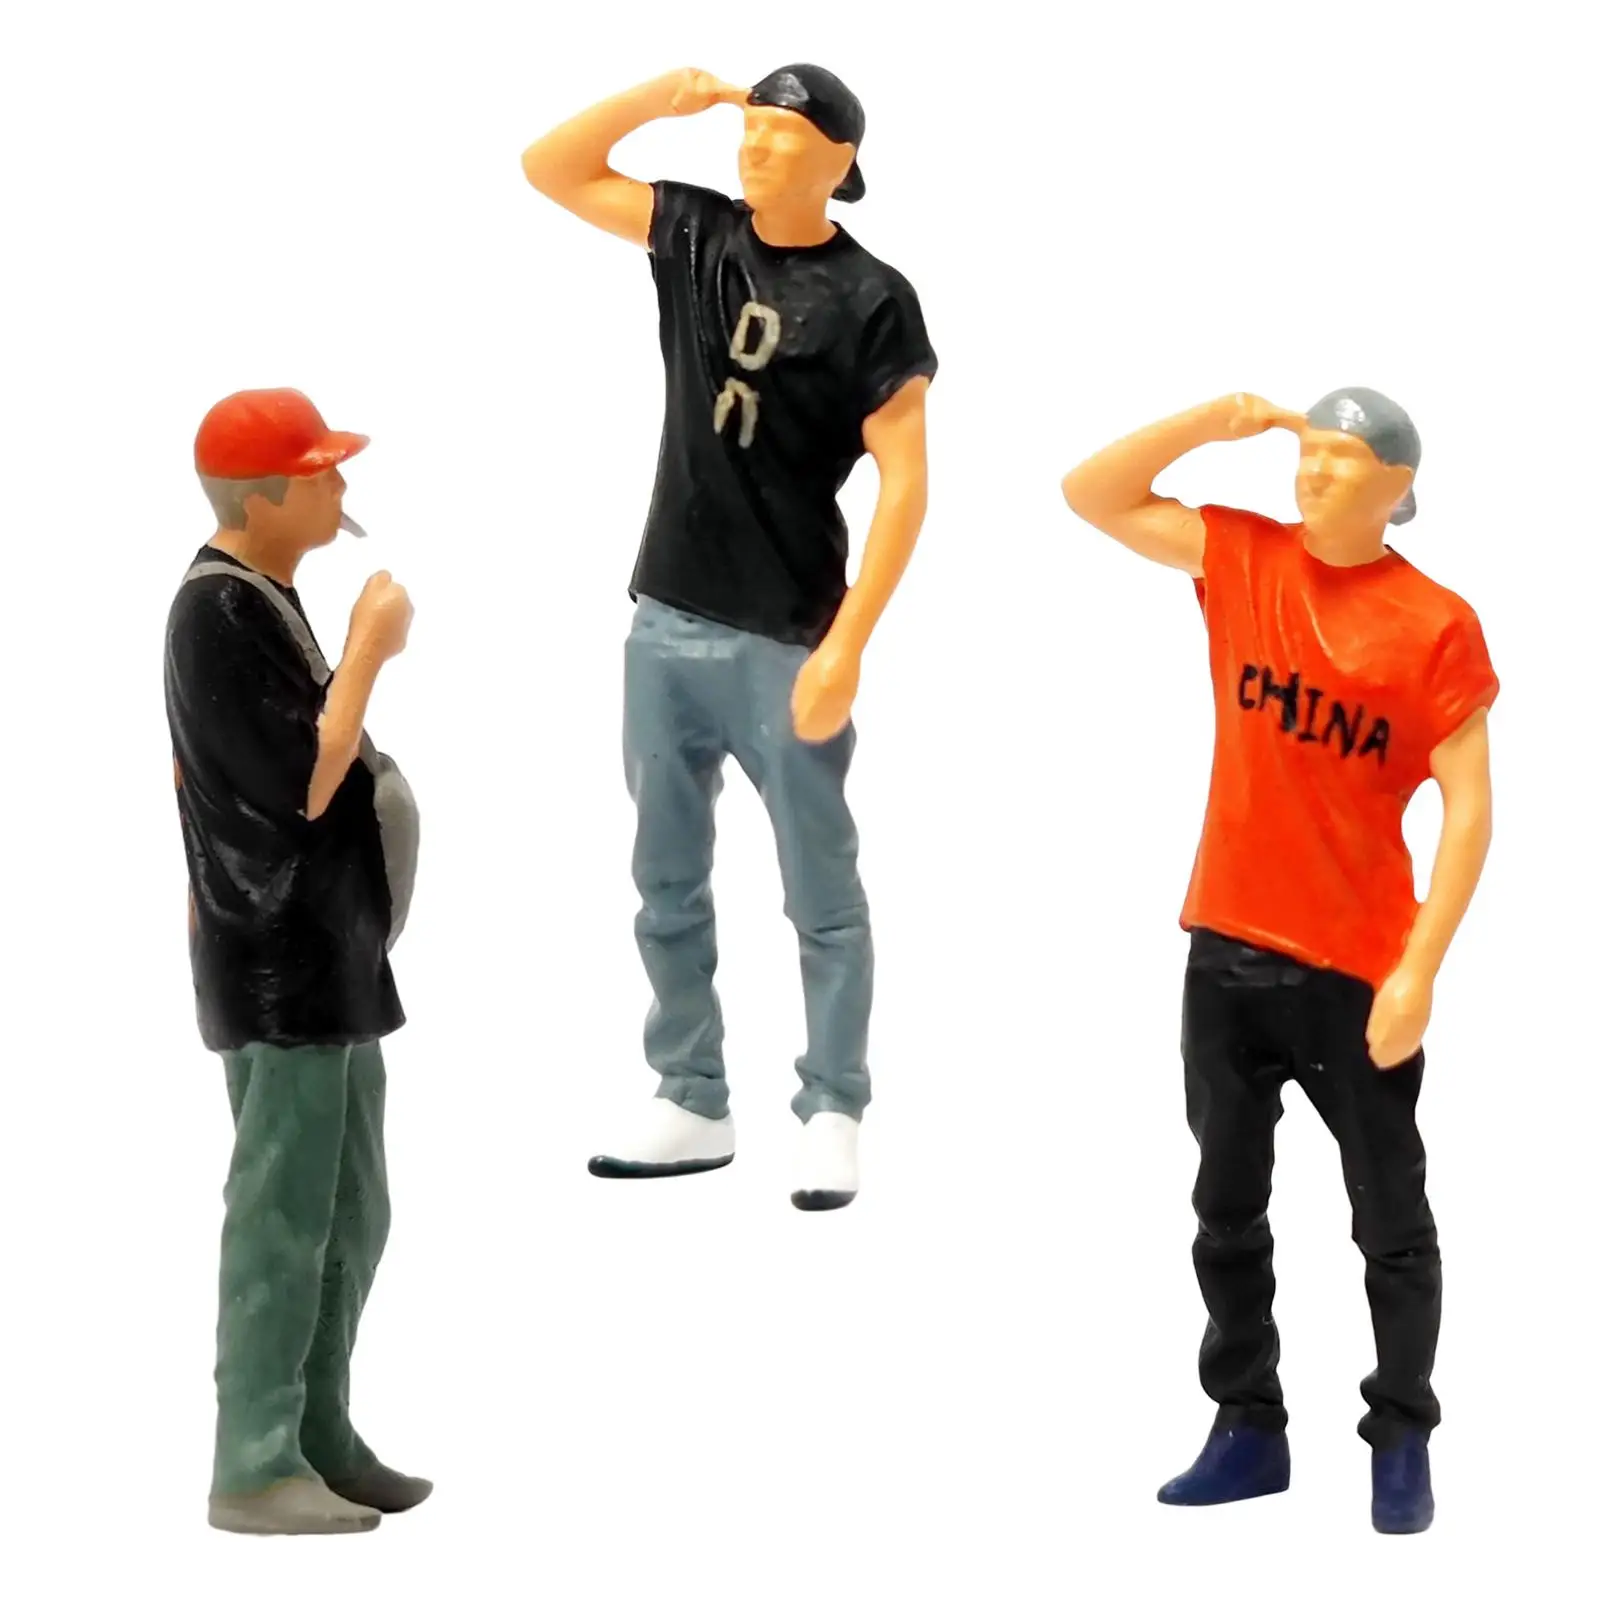 Tiny 1/64 Scale Men Figures for Desktop Decor Railway Model Street Scene